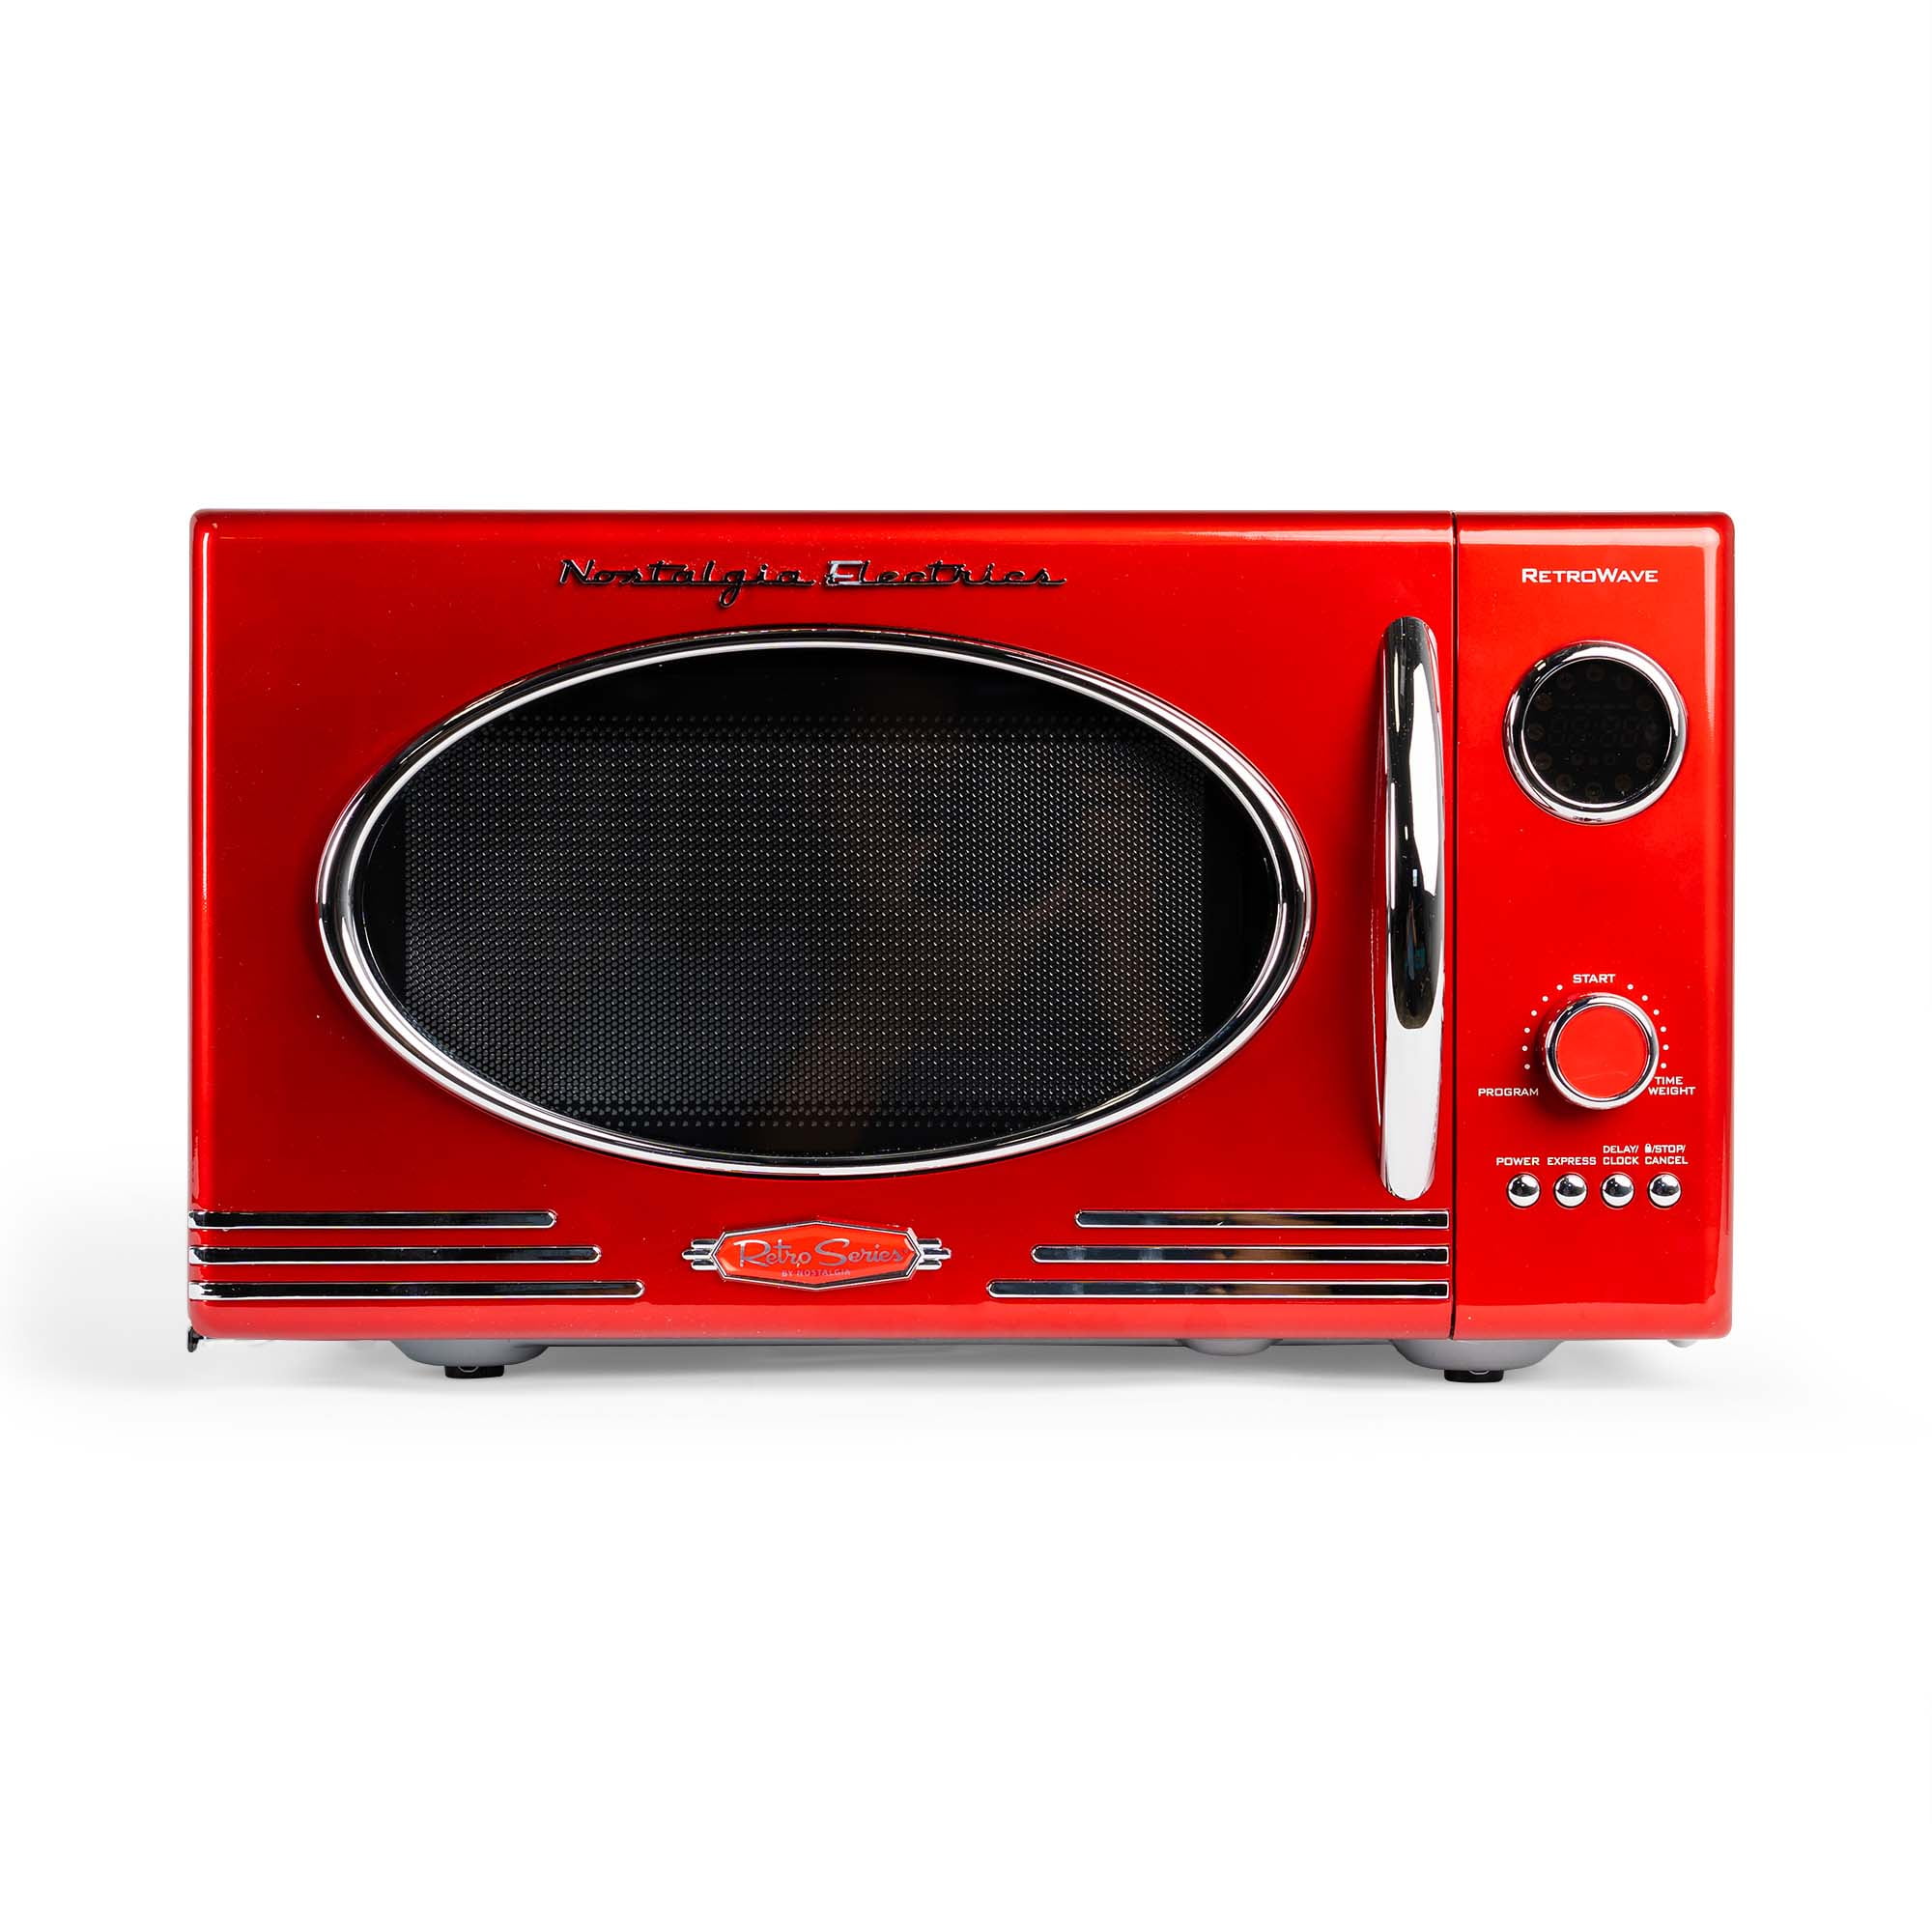 Nostalgia Retro Microwave Oven - .9 Cu. Ft.